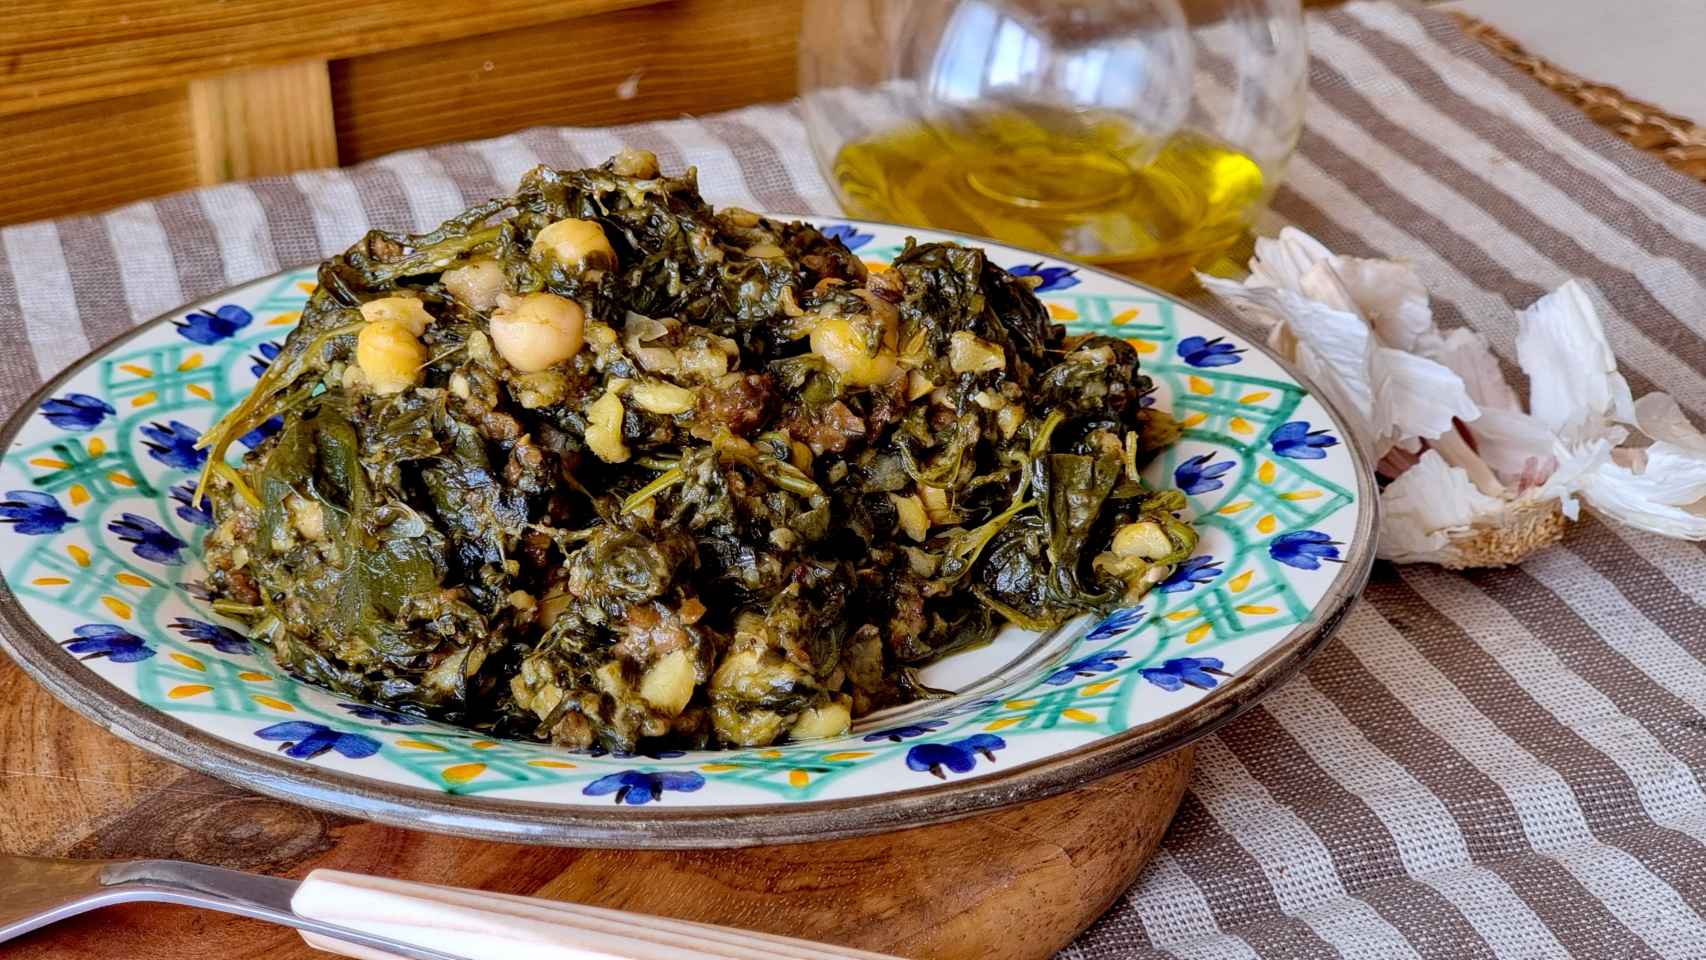 Espinacas con garbanzos estilo andaluz, un plato vegano lleno de tradición